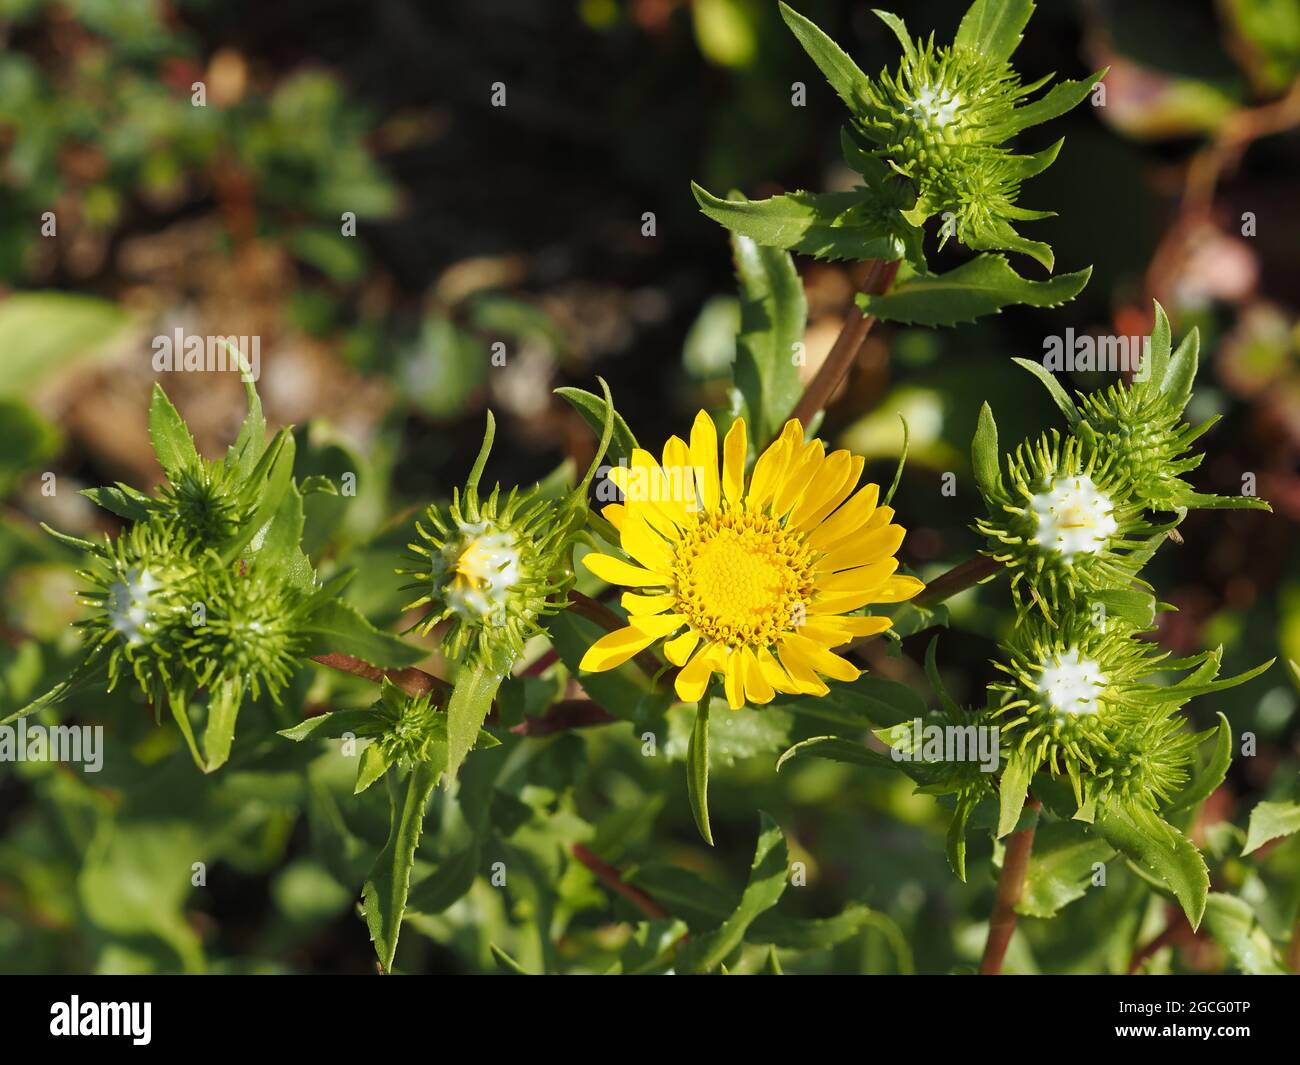 Gumweed, possibly Grindelia integrifolia, in Washington state, USA Stock Photo